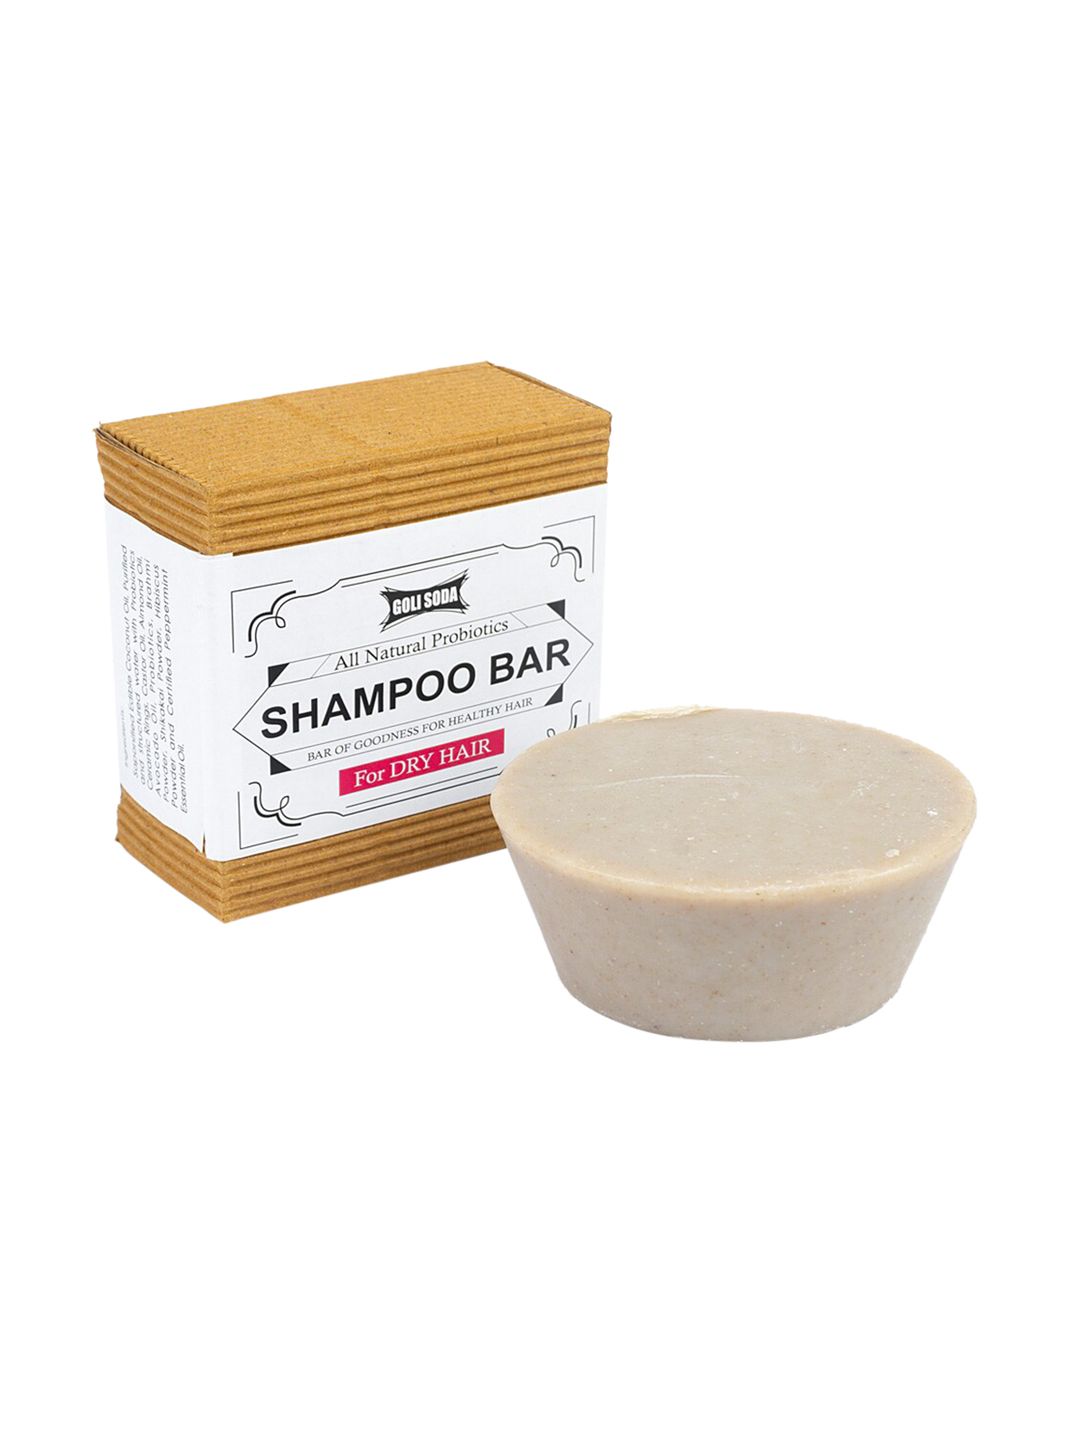 GOLI SODA All Natural Probiotics Shampoo Bar for Dry Hair 90 g Price in India